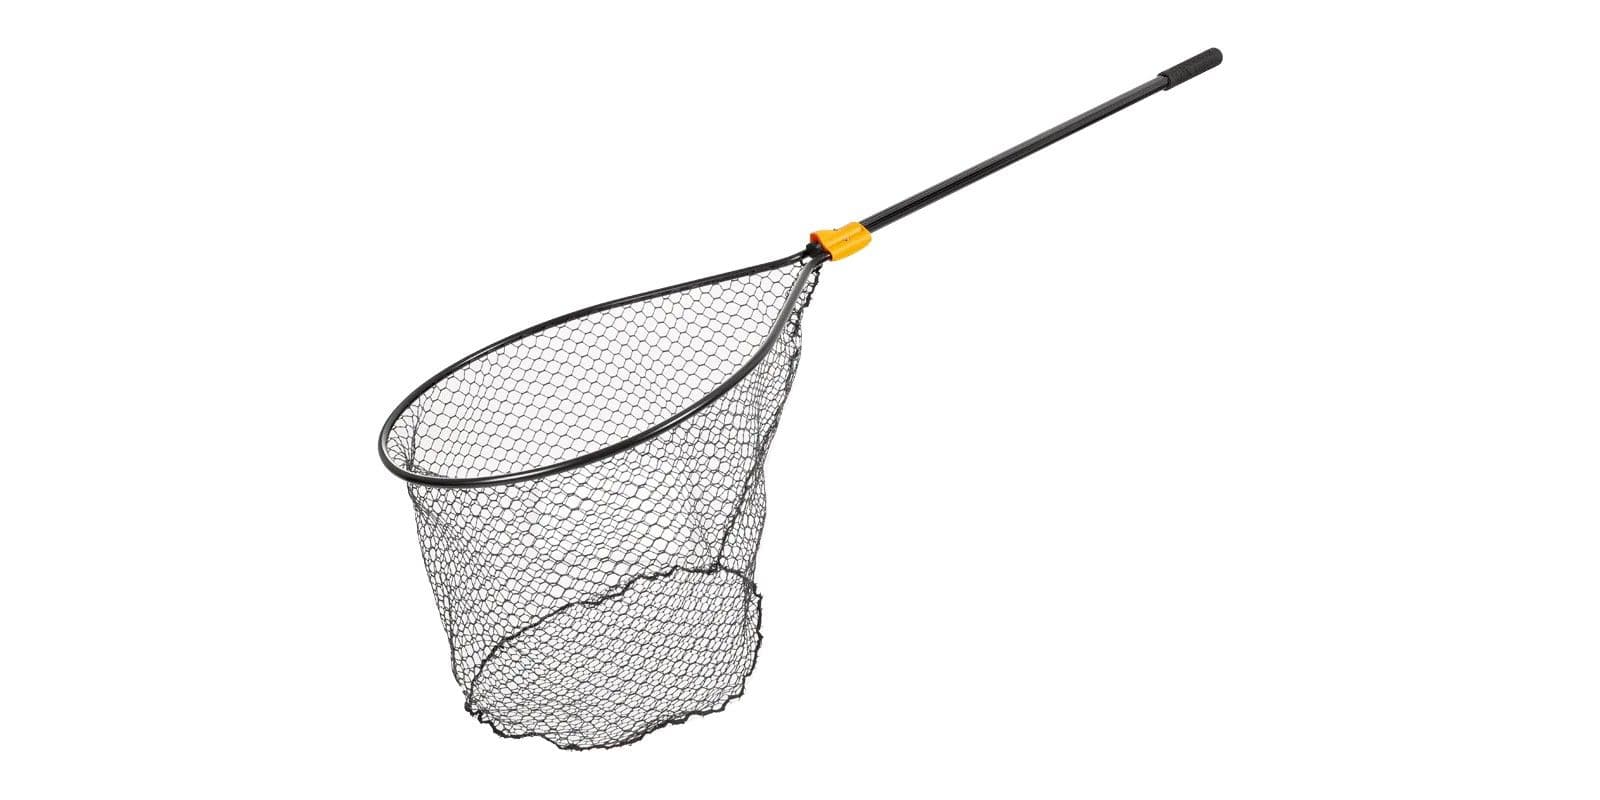 Lucky Strike Telescopic Salmon Fishing Net with Fiberglass Handle